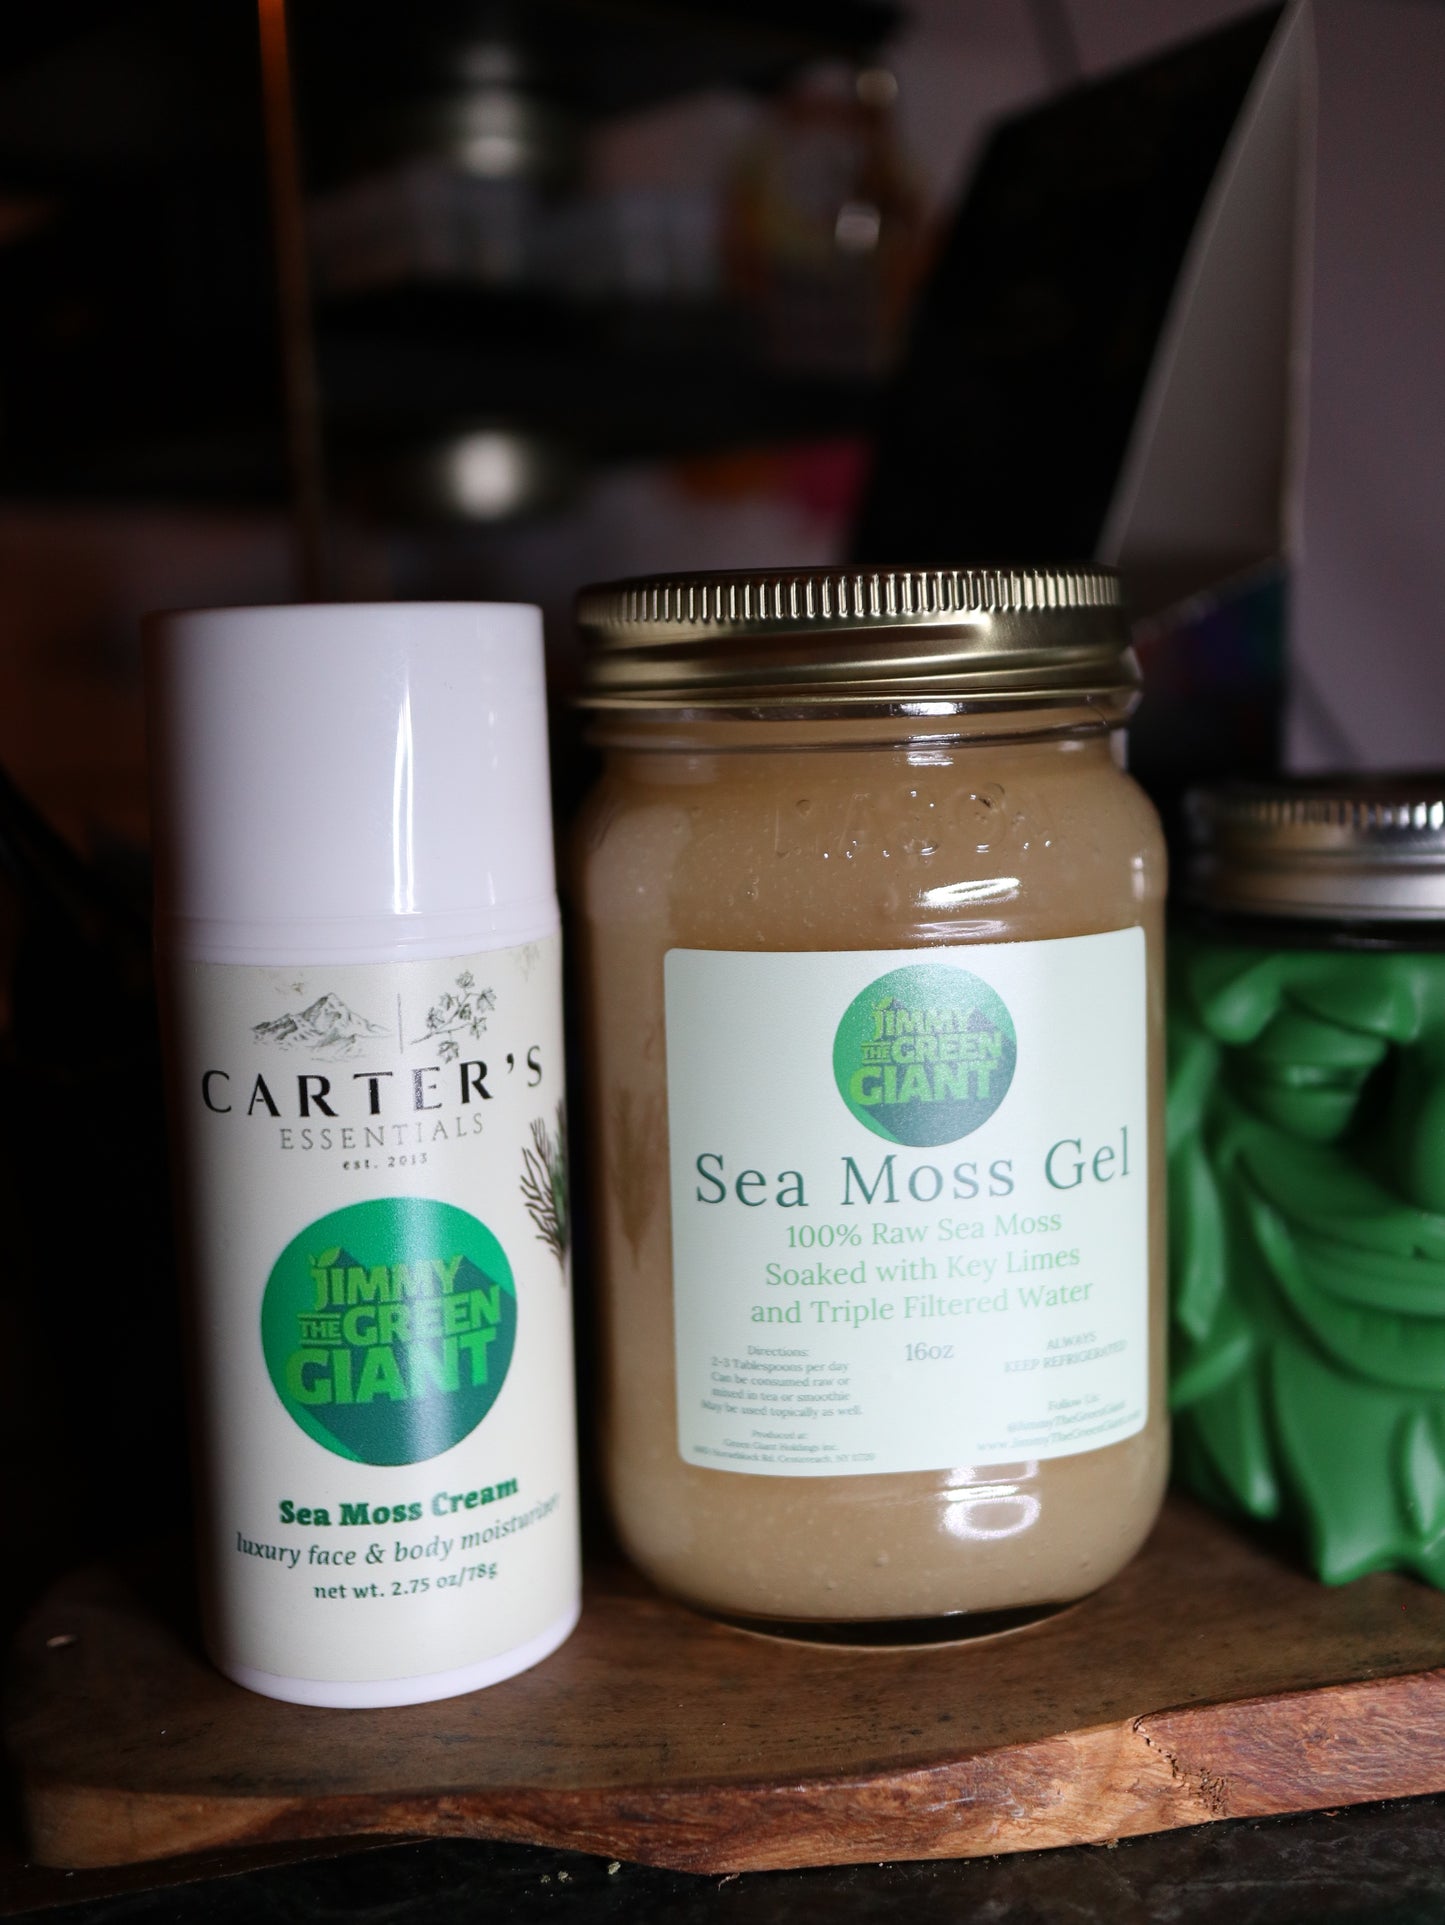 Sea Moss Cream